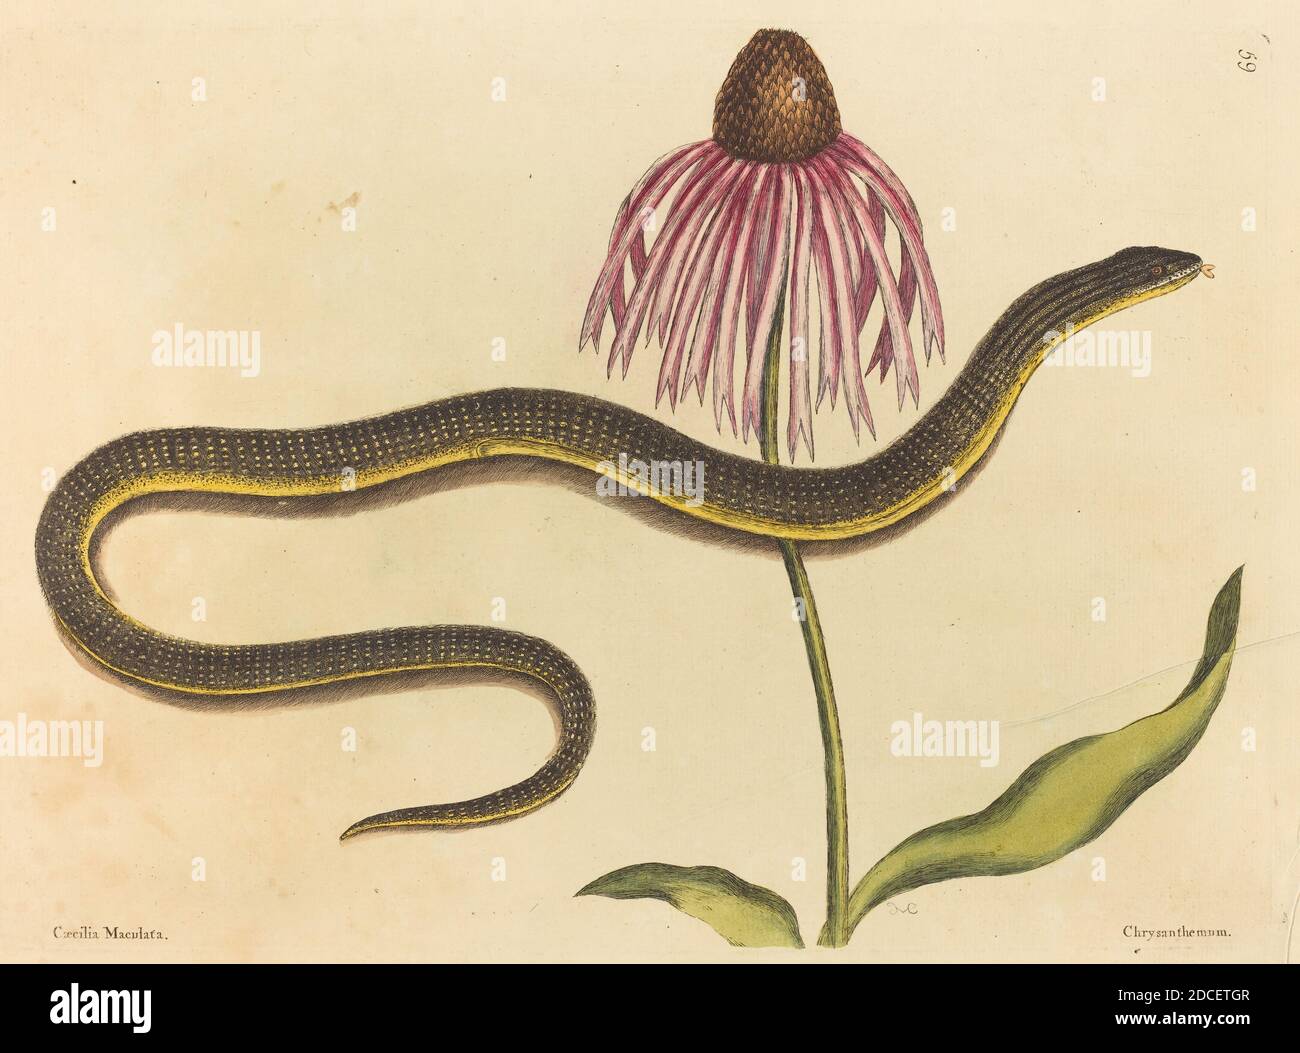 Mark Catesby, (artiste), anglais, 1679 - 1749, The Glass Snake (Anguis ventralis), NAT. Hist. Of Carolina, Florida and the Bahama Isl.: V.2,T59, (série), publié 1731-1743, gravure de couleur main Banque D'Images